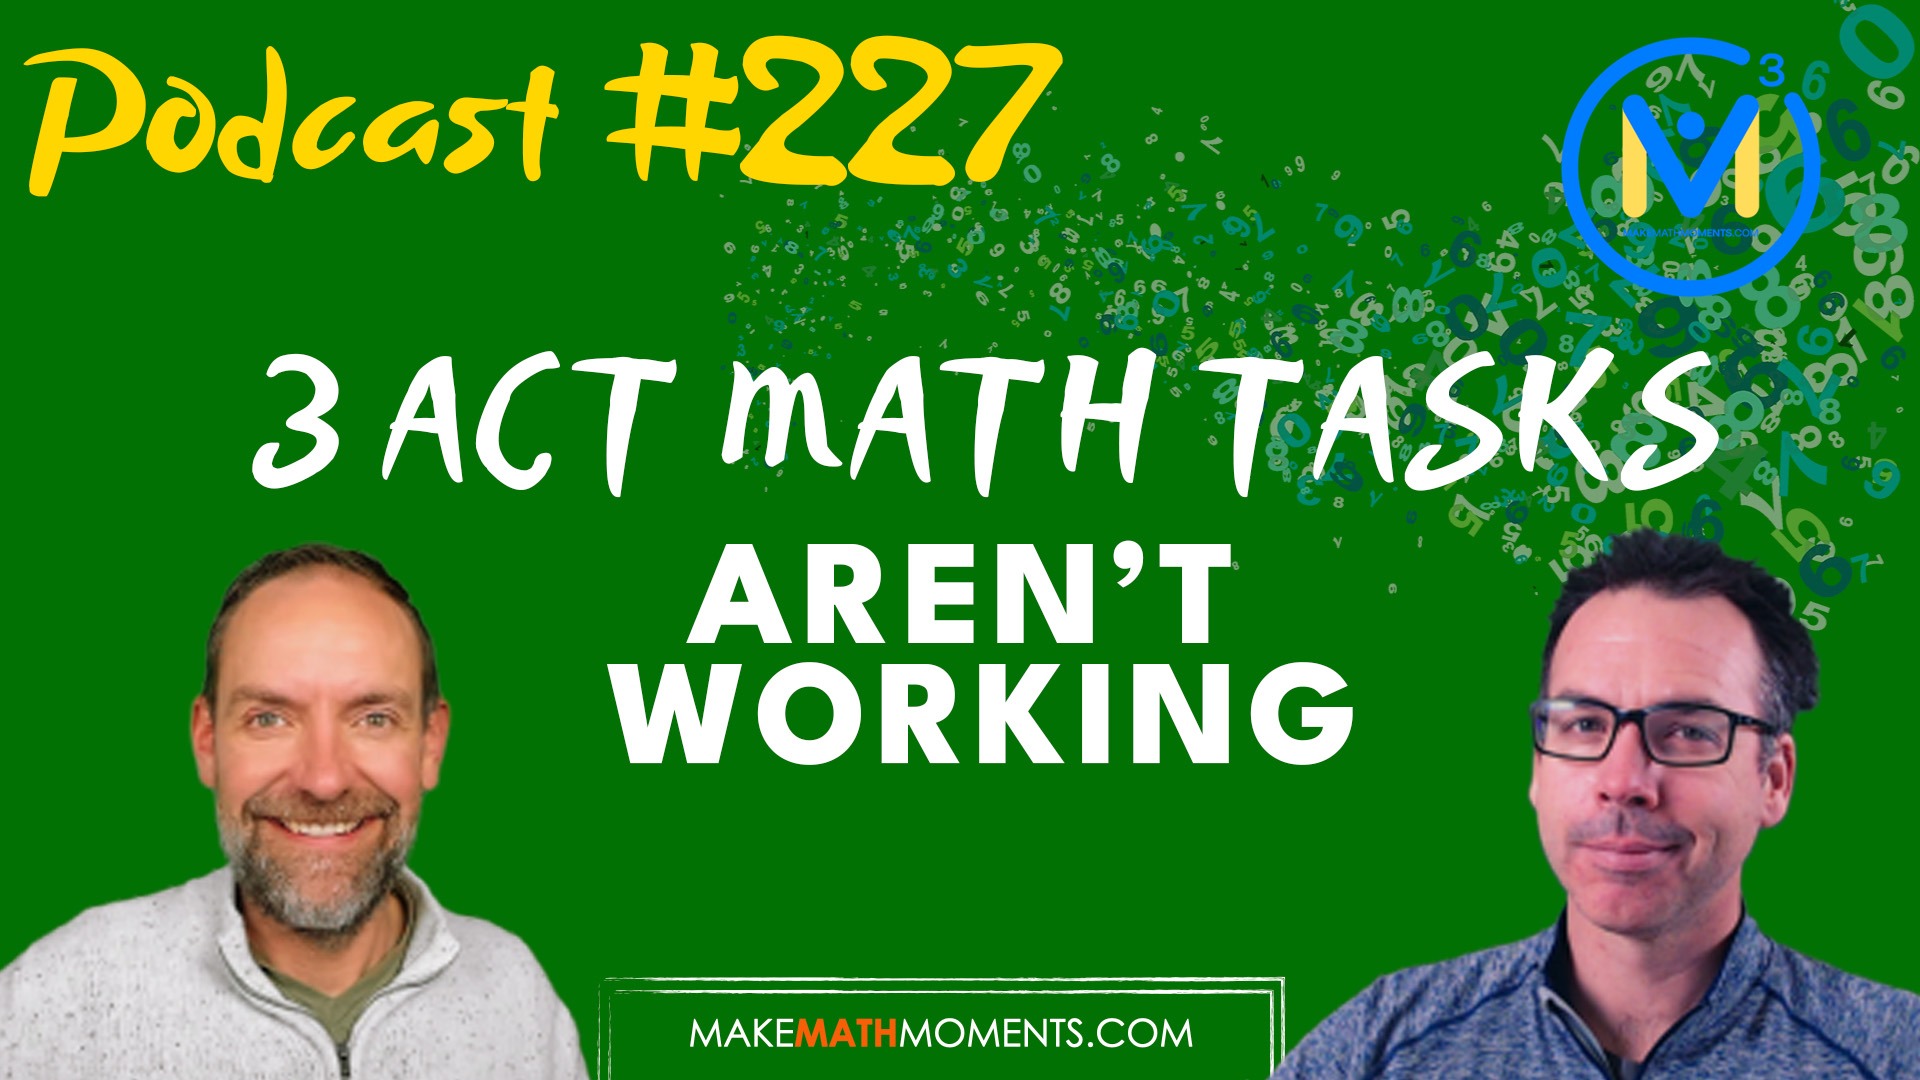 Episode 227: 3 Act Math Tasks Aren’t Working